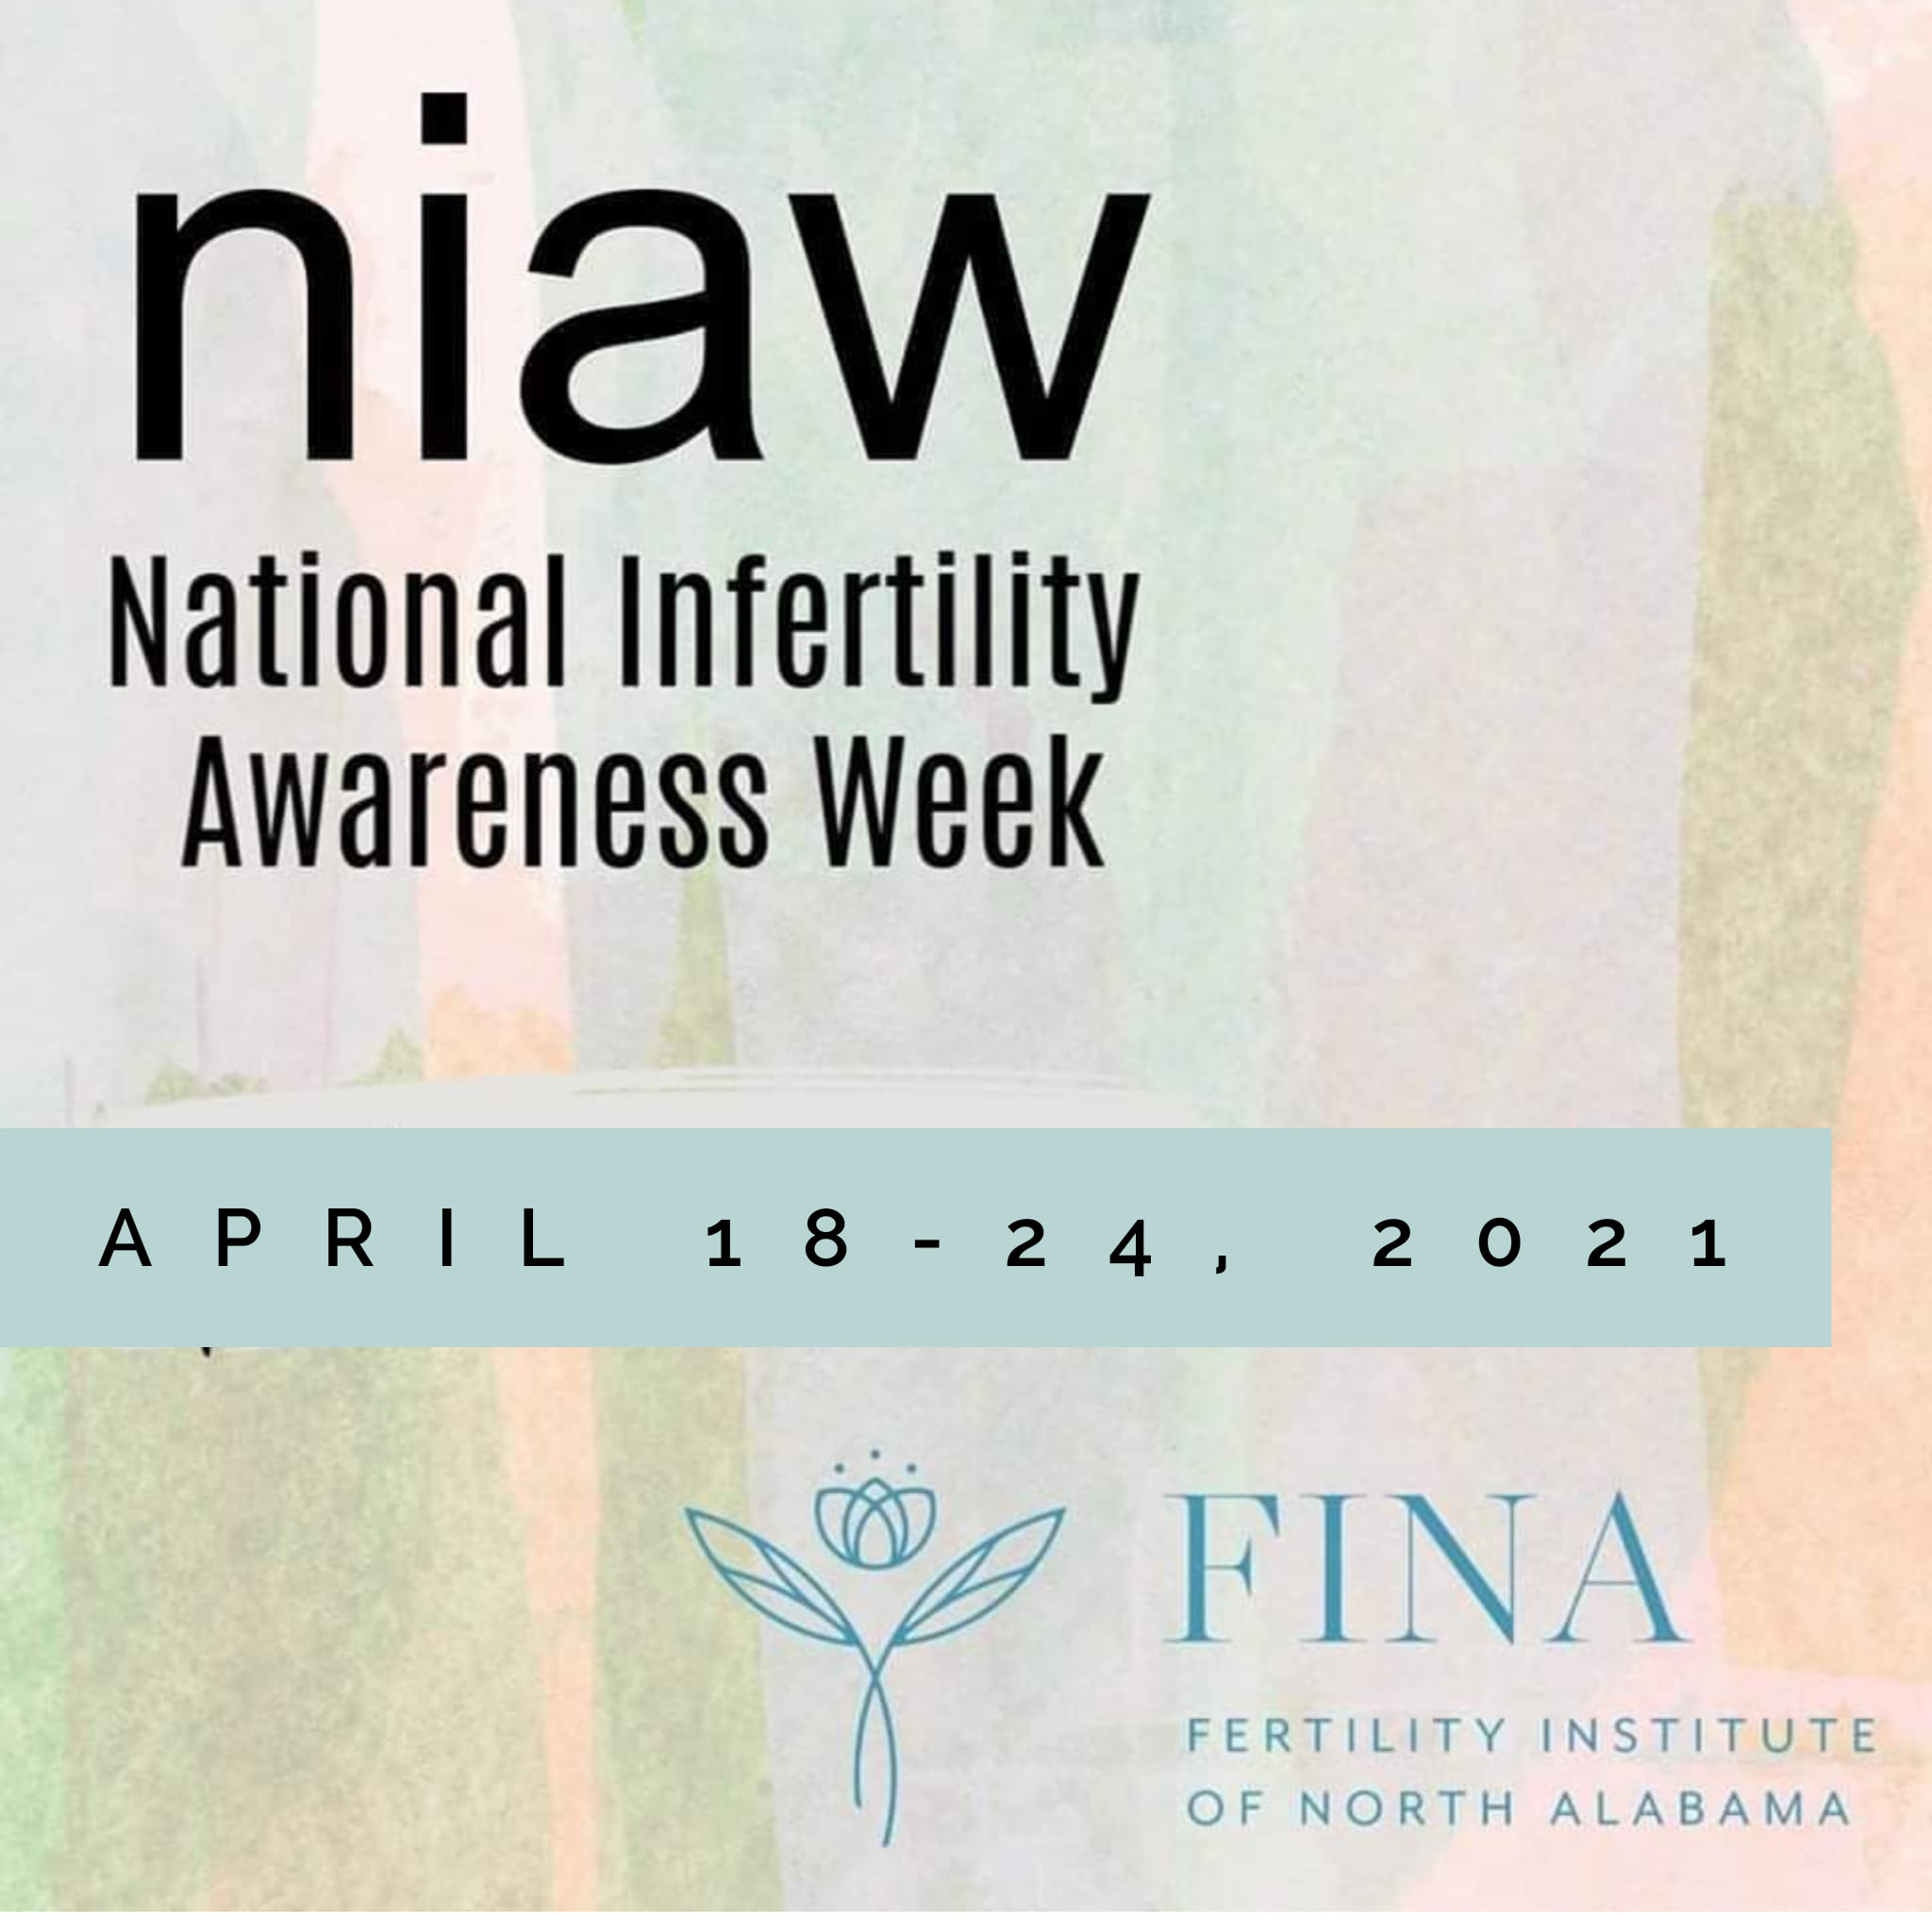 National Infertility Awareness Week FINA Fertility Institute of